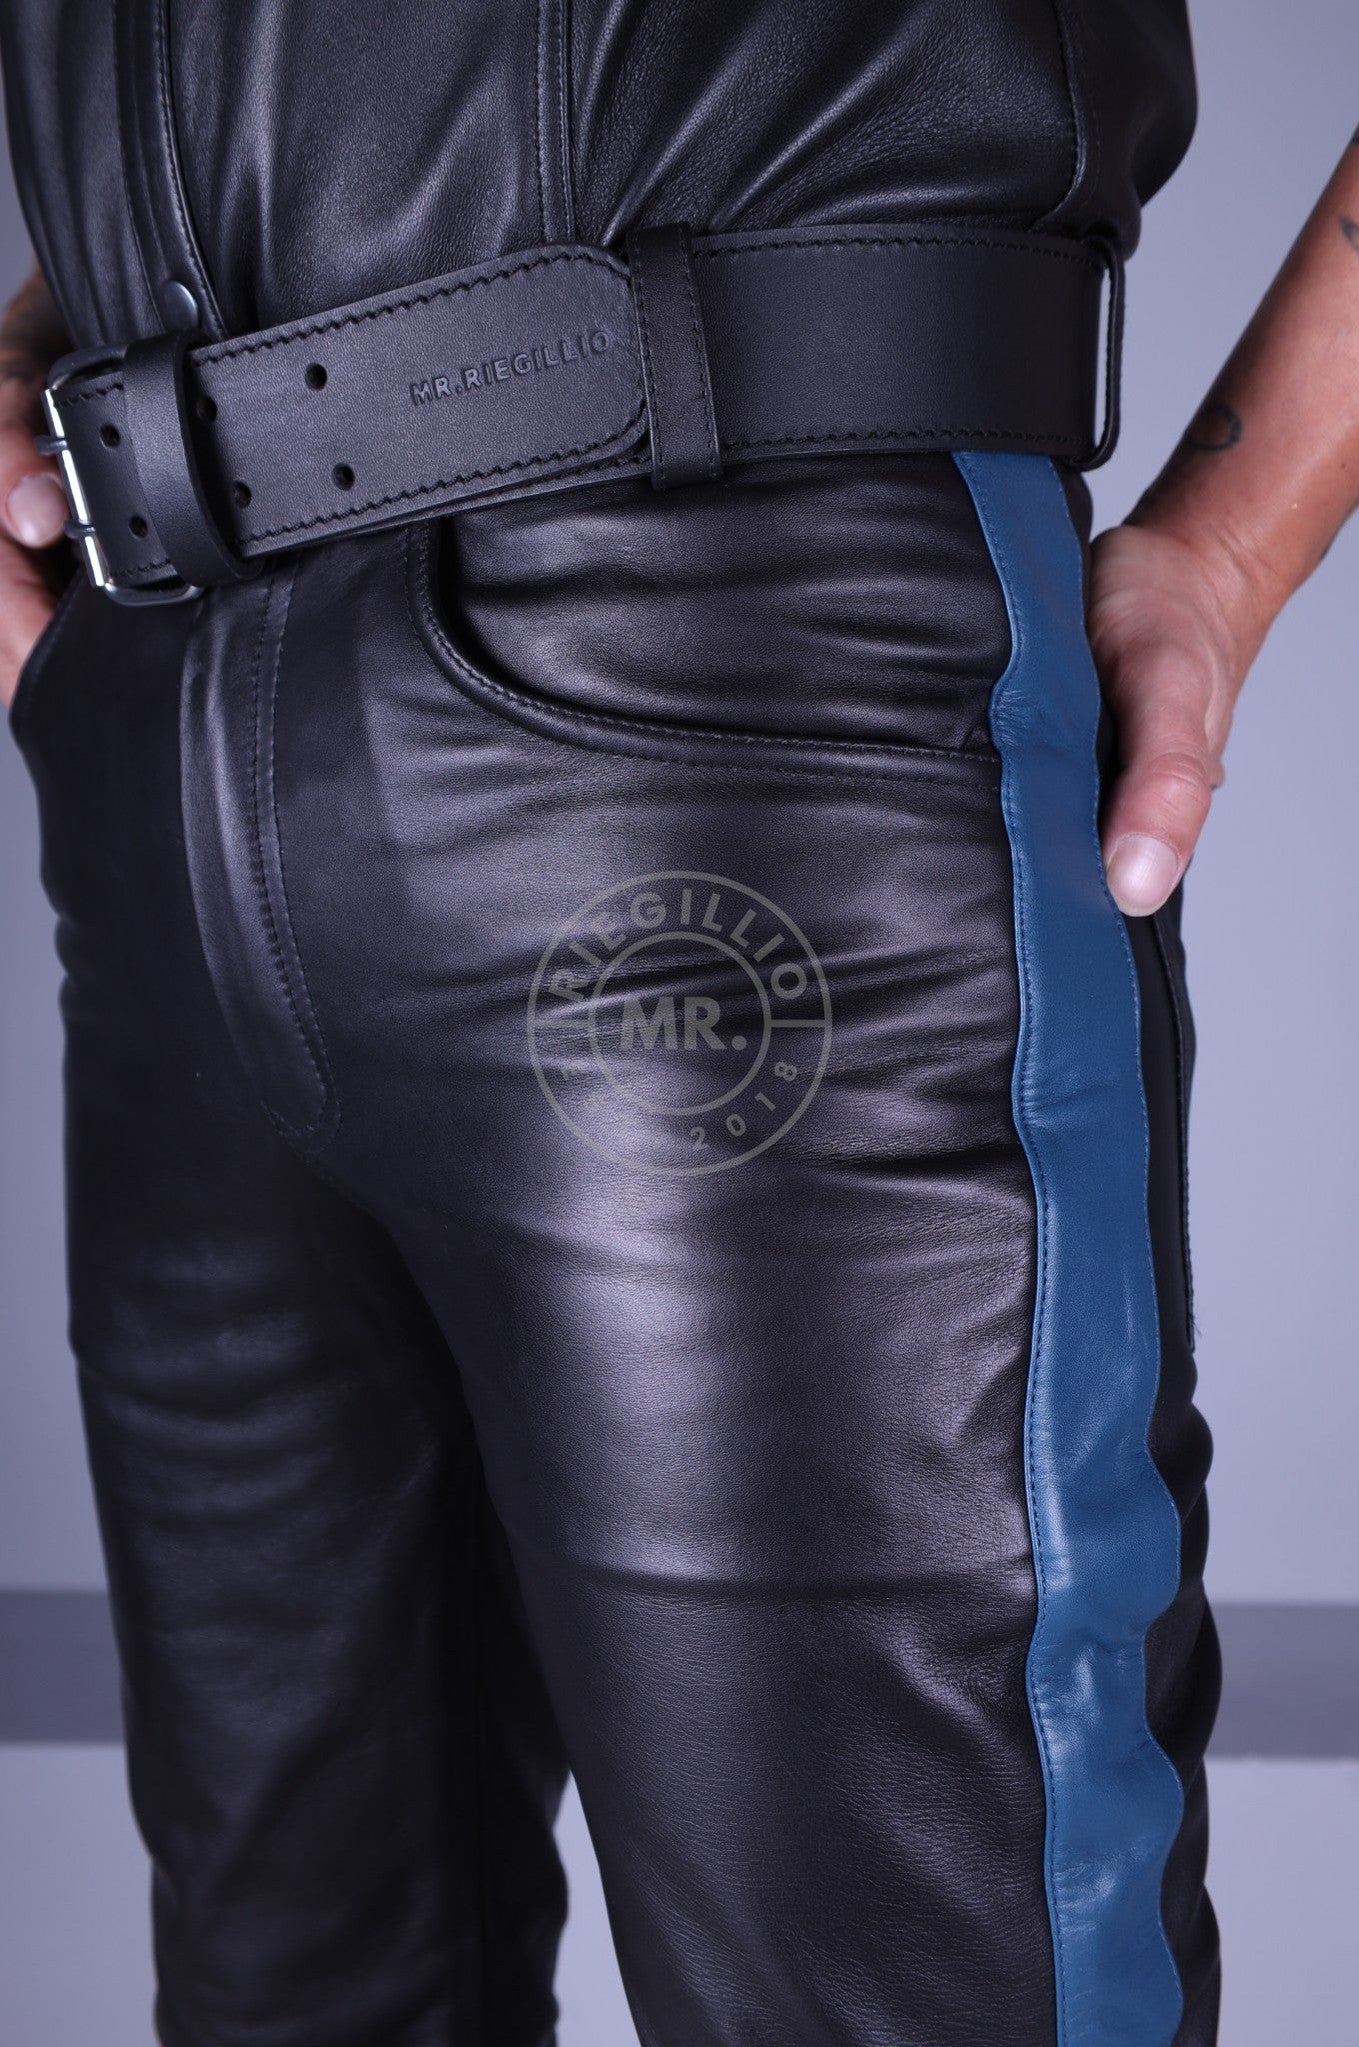 Black Leather 5 Pocket Pants - Jeans Blue Stripe at MR. Riegillio